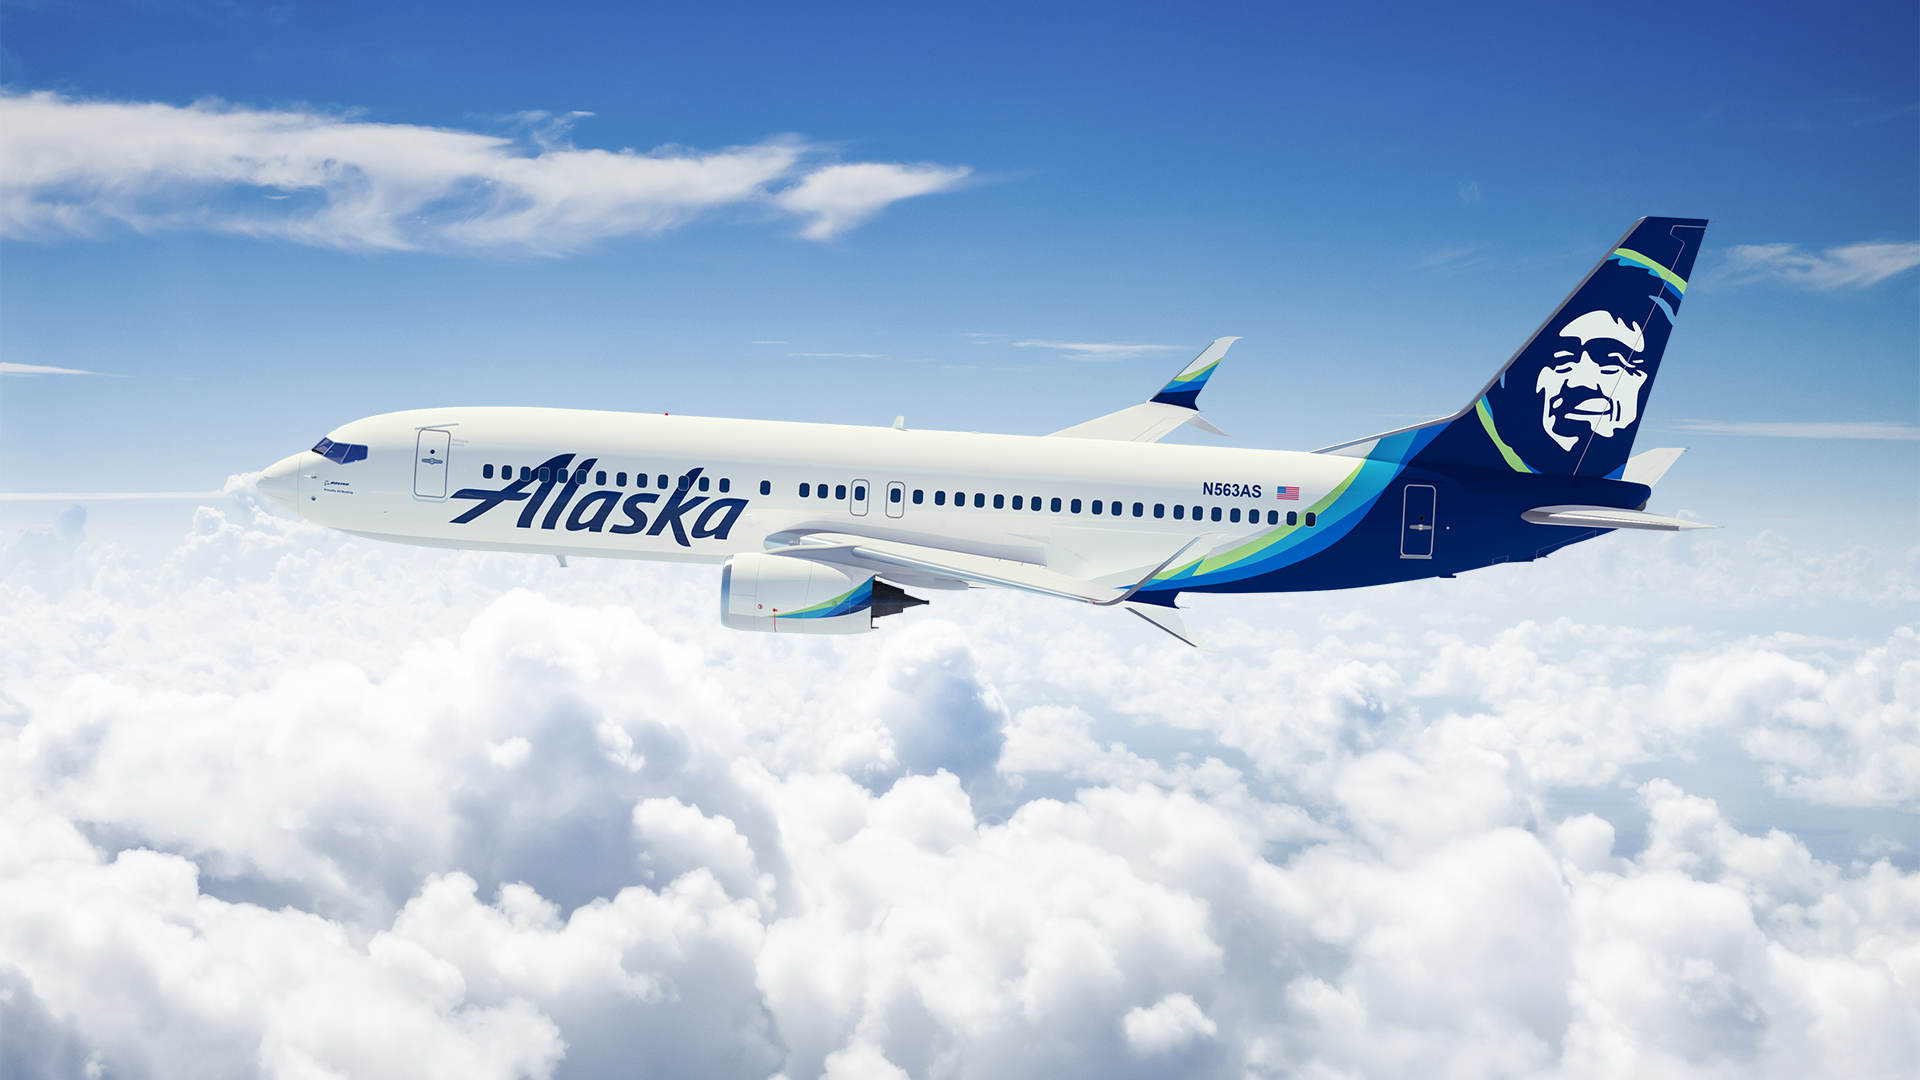 Alaska Airlines Rebrand